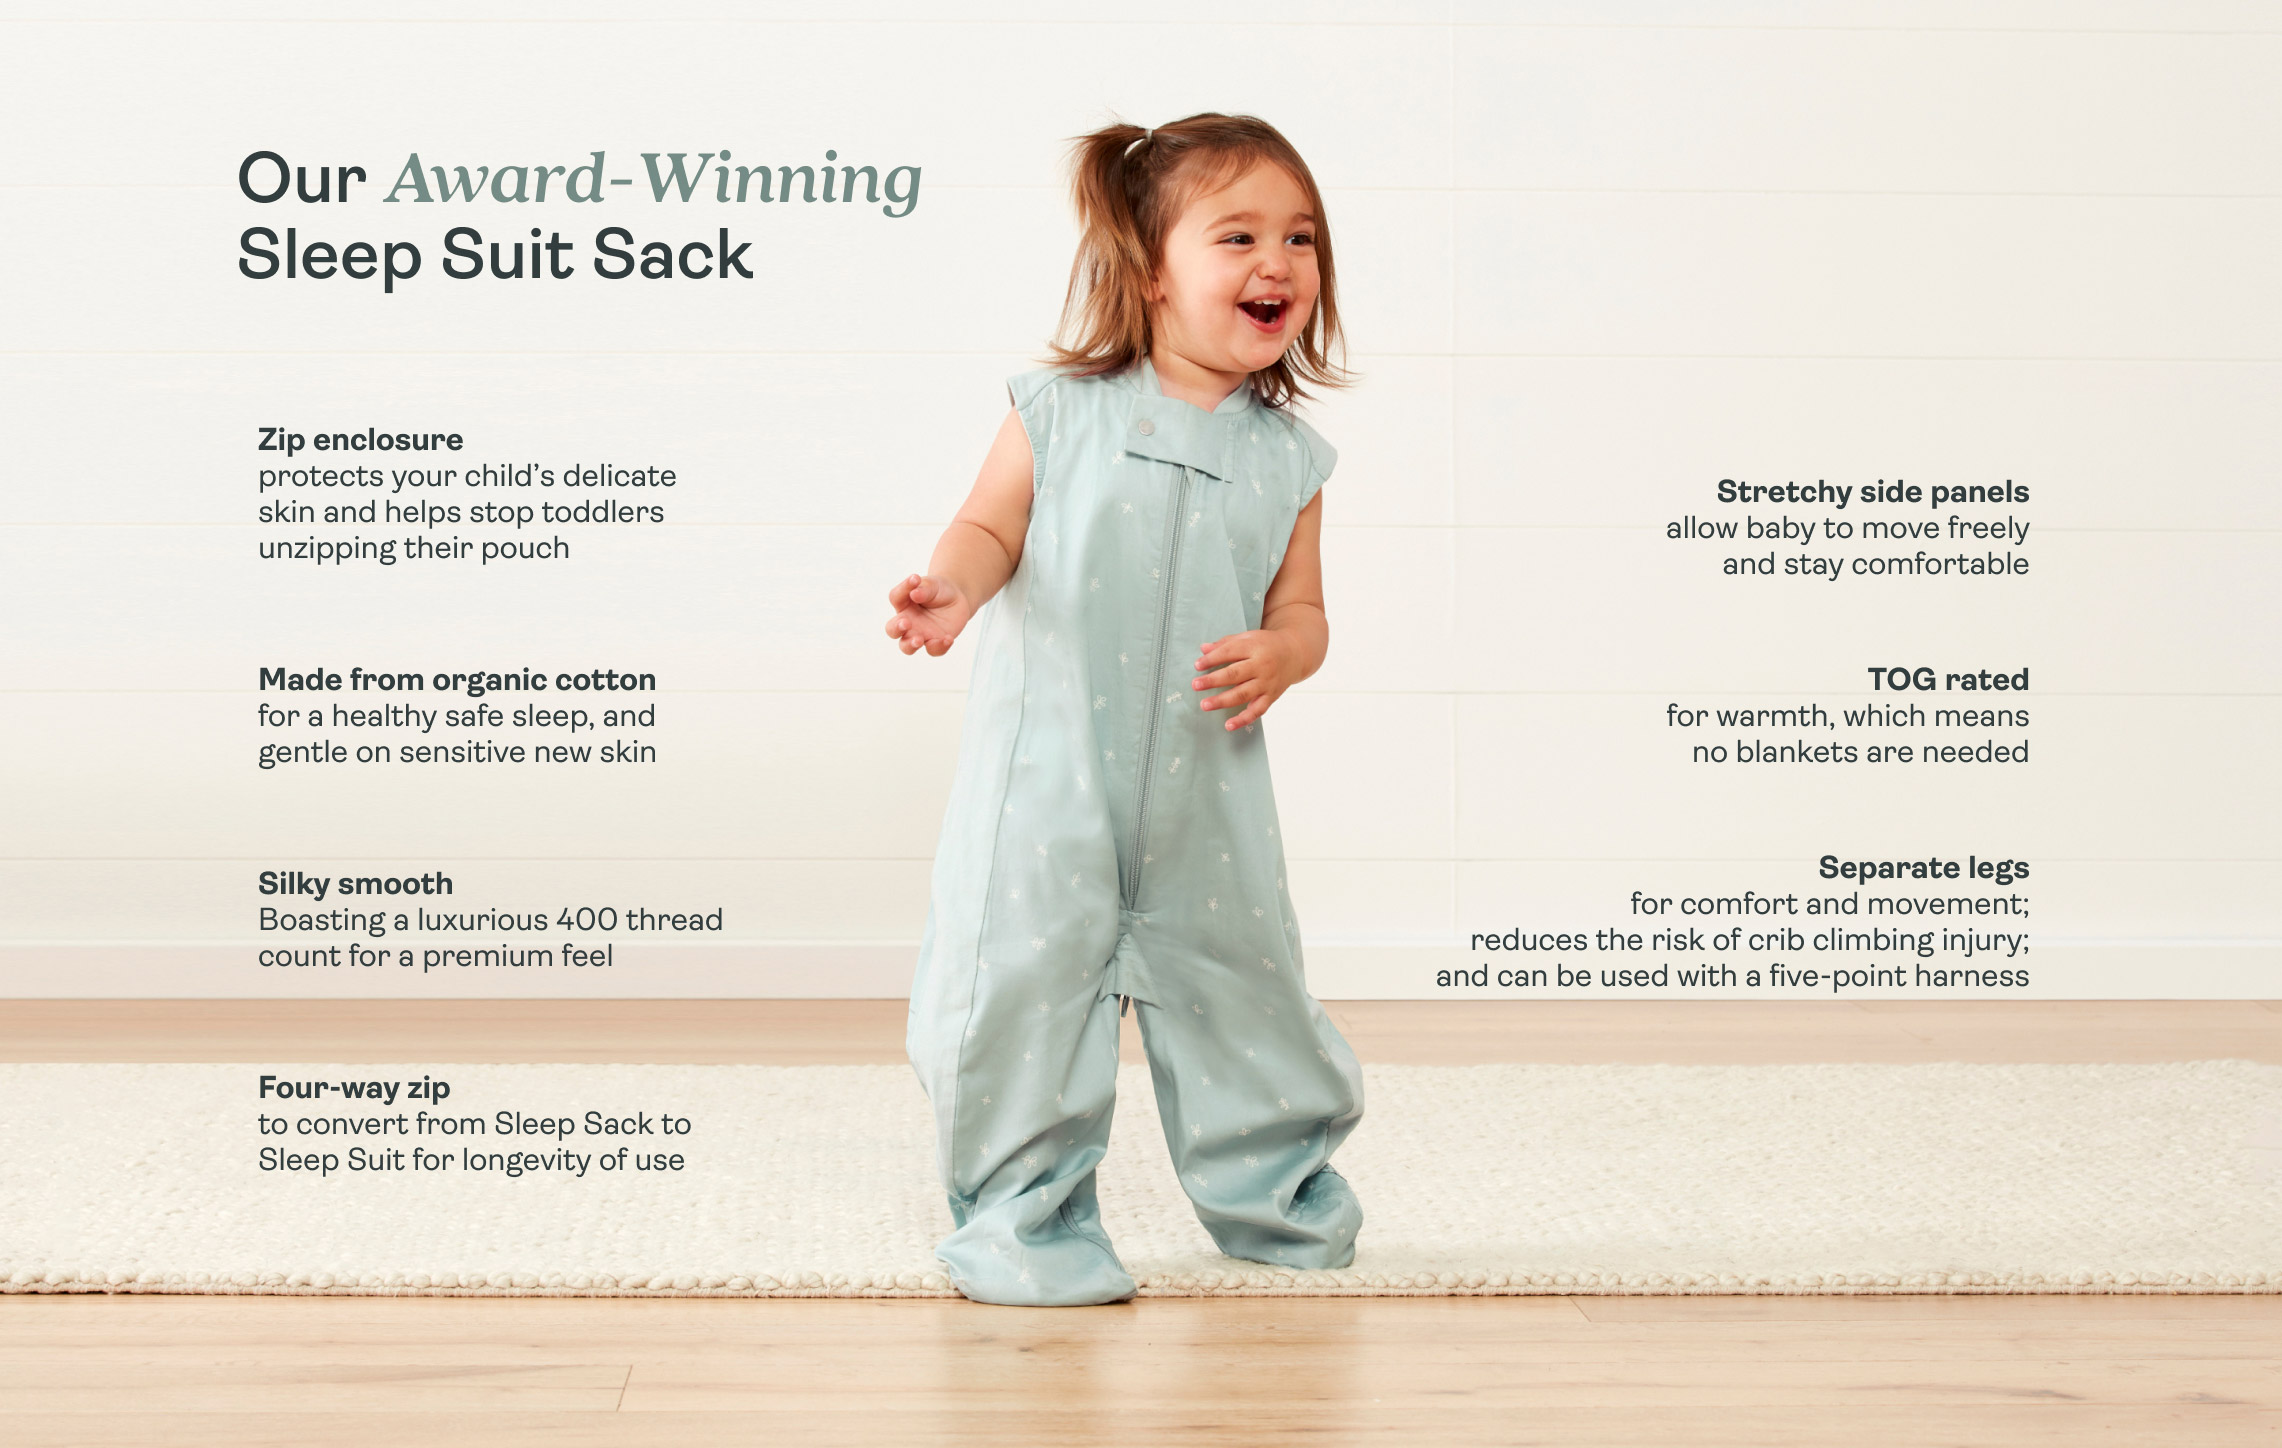 Award-winning Sleep Suit Sack